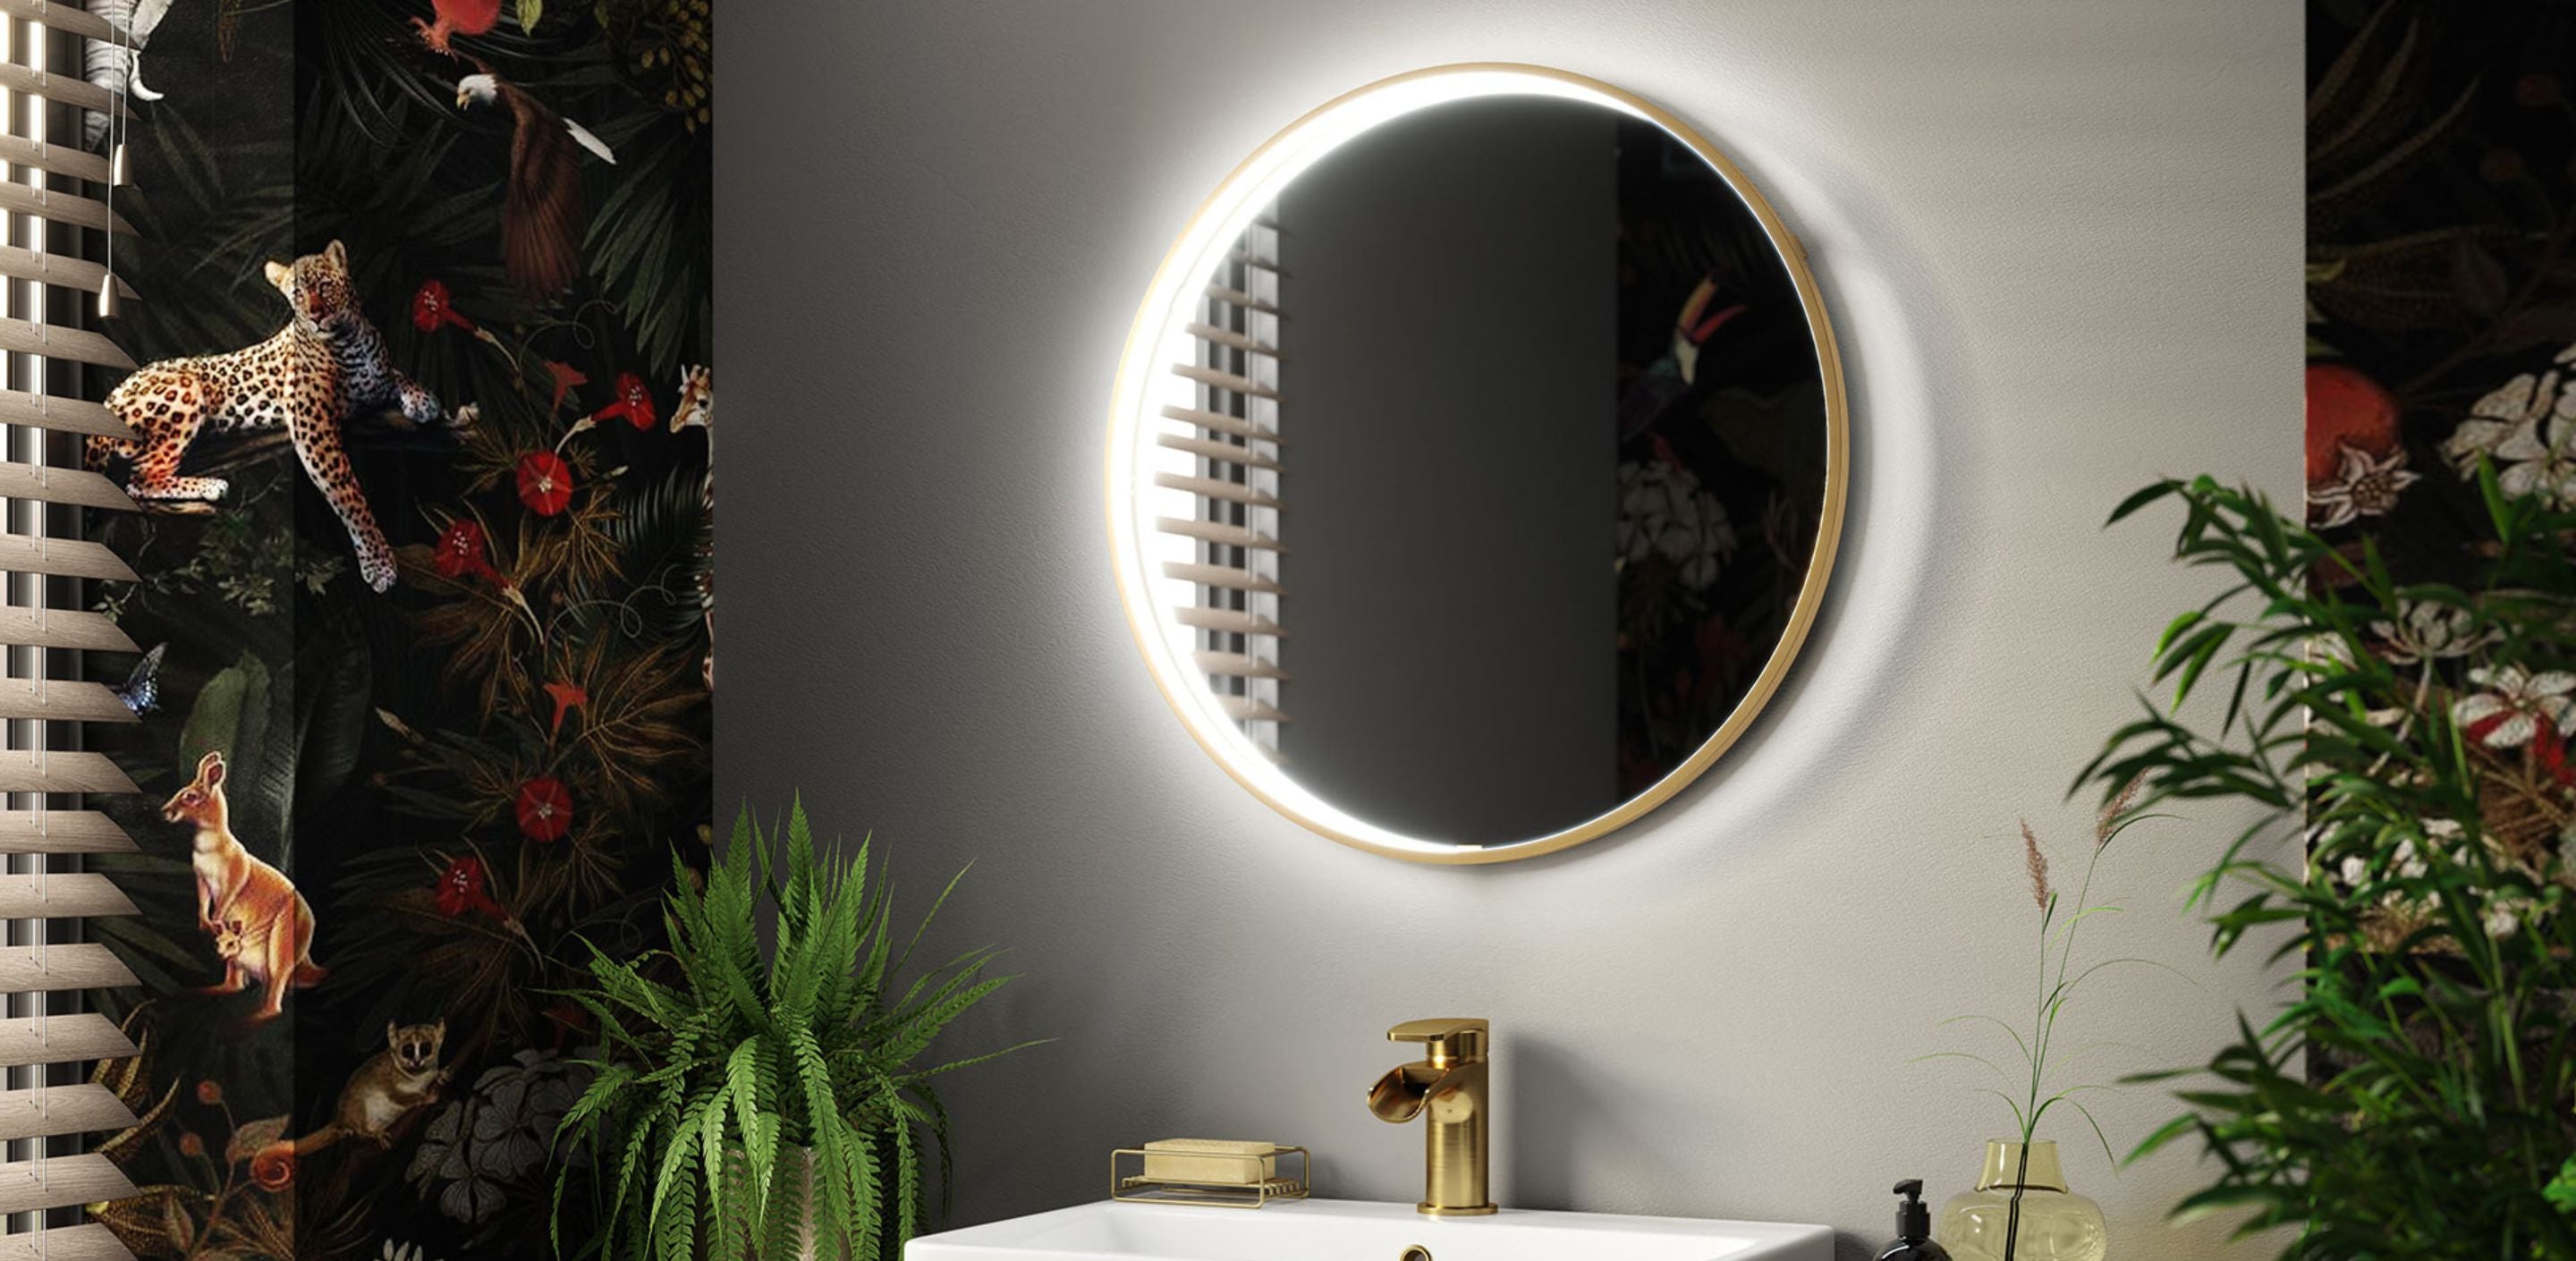 Choosing the perfect bathroom mirror